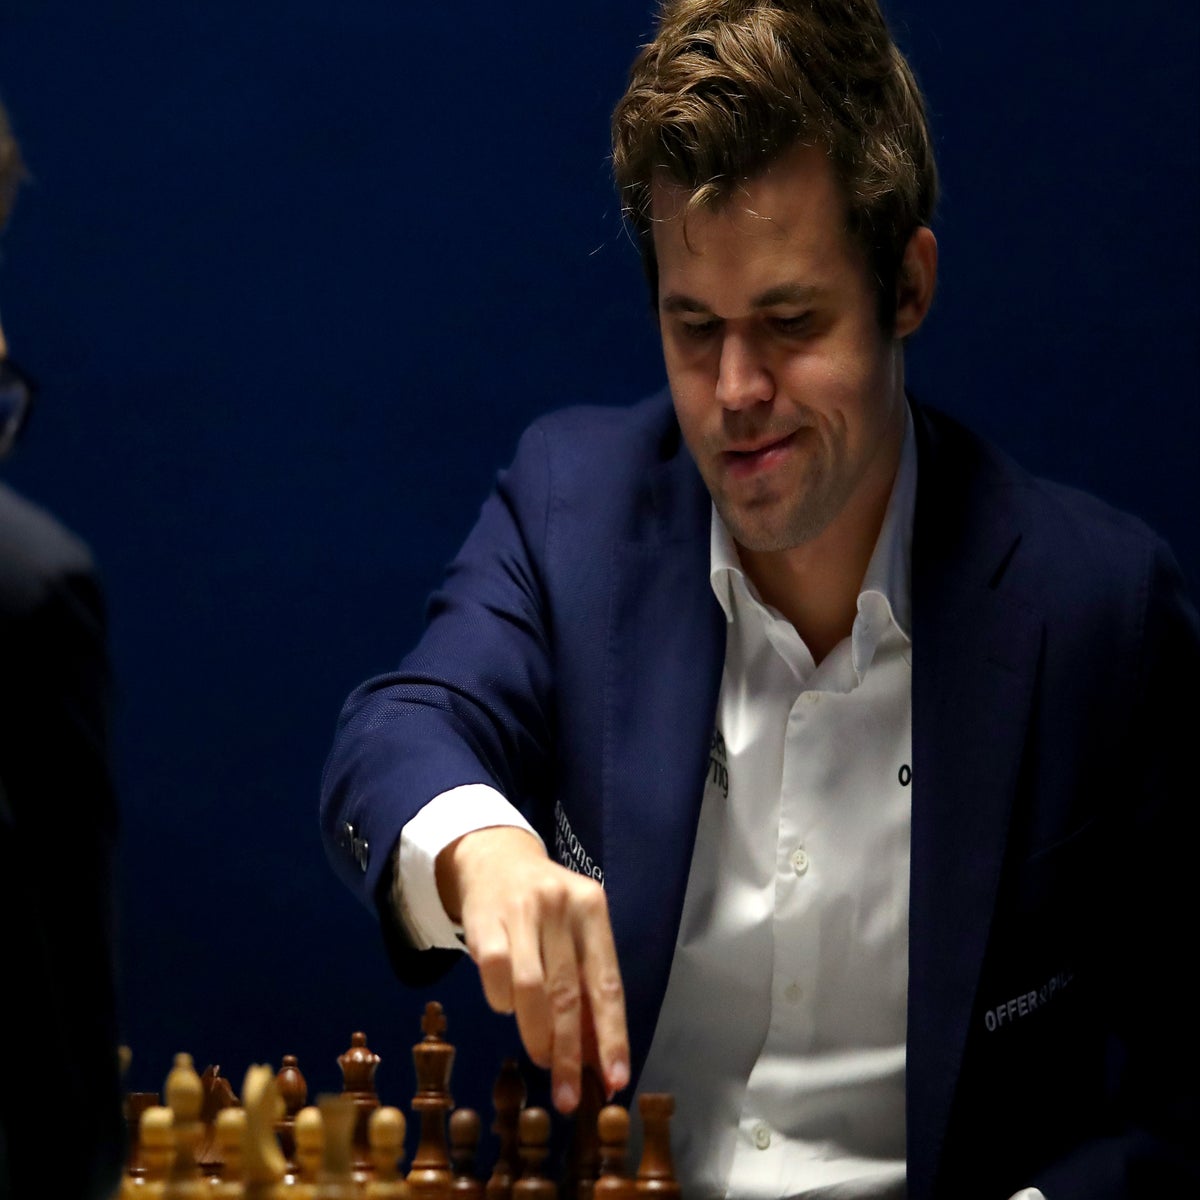 7886  Magnus carlsen, Chess players, Chess master